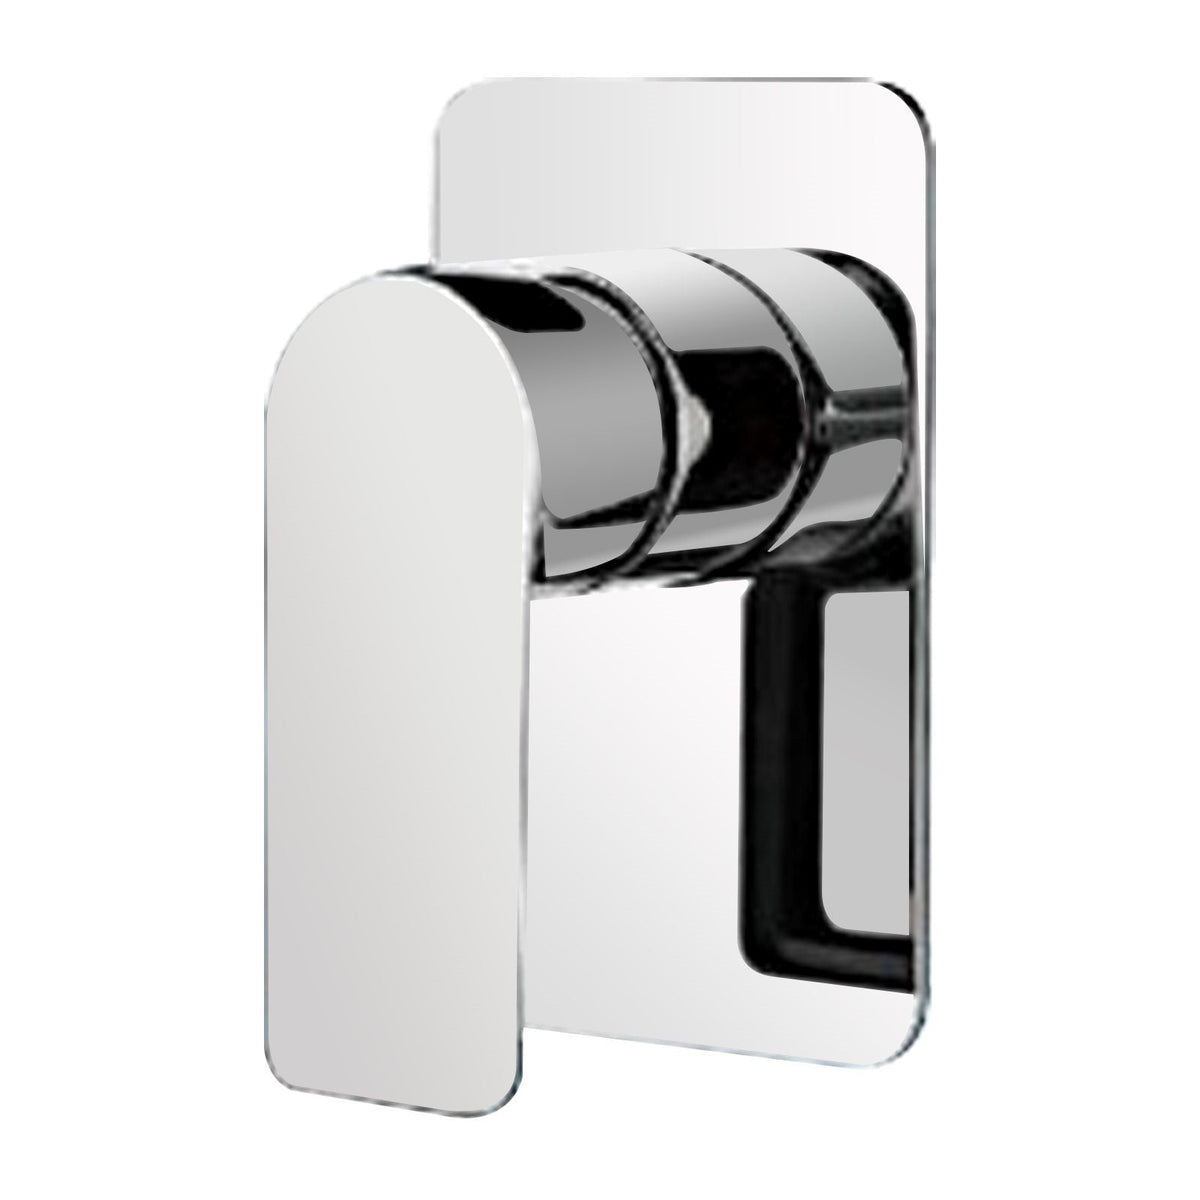 VOG Solid Brass Chrome Shower/Bath Wall Mixer